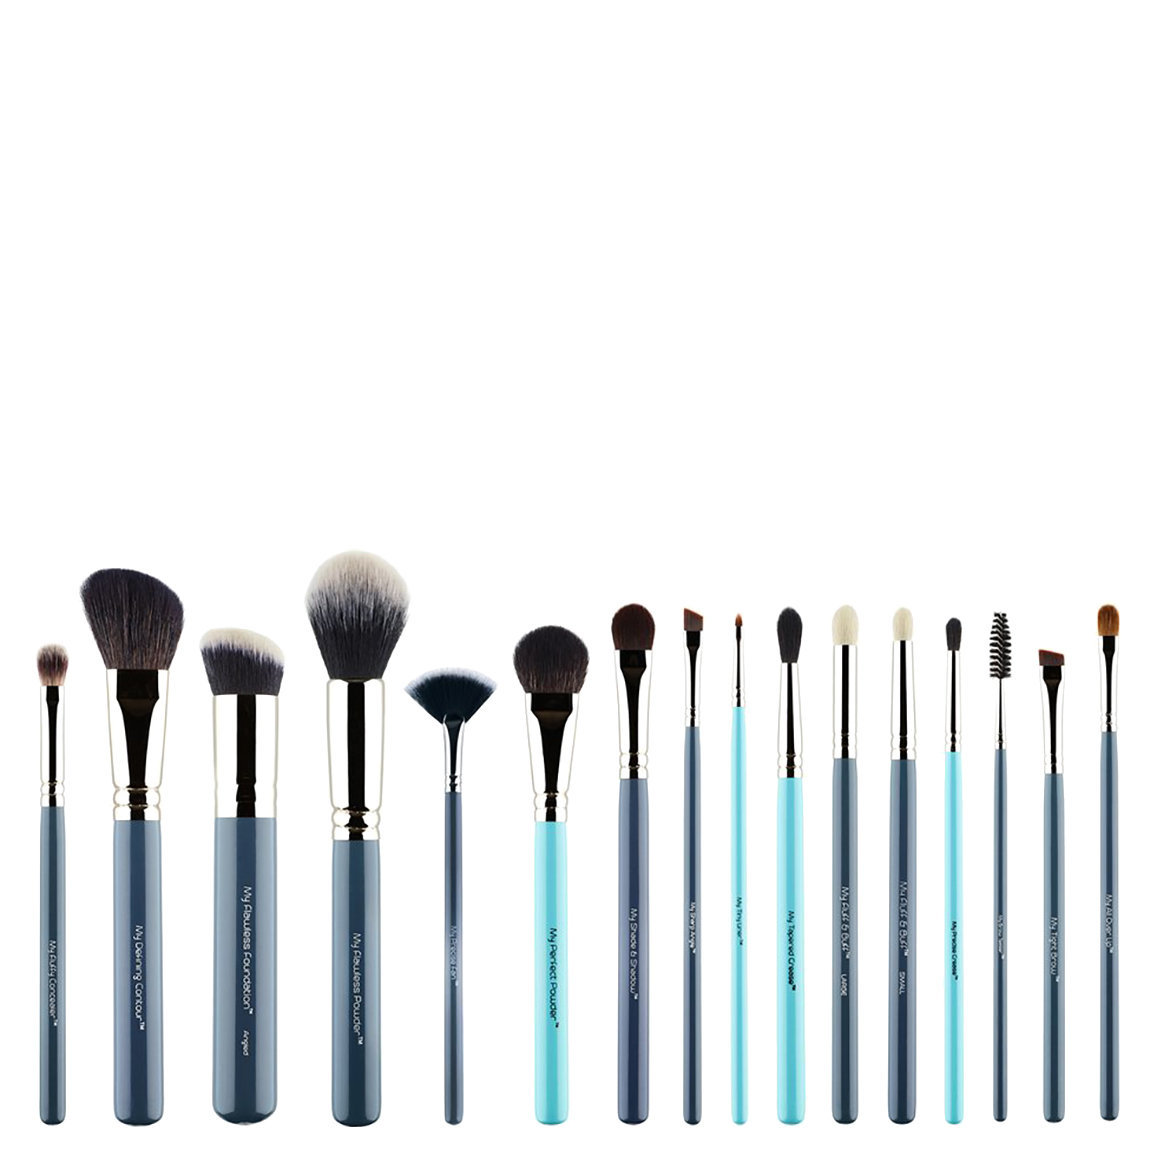 MYKITCO. My Pro Selects Makeup Brush Set alternative view 1.